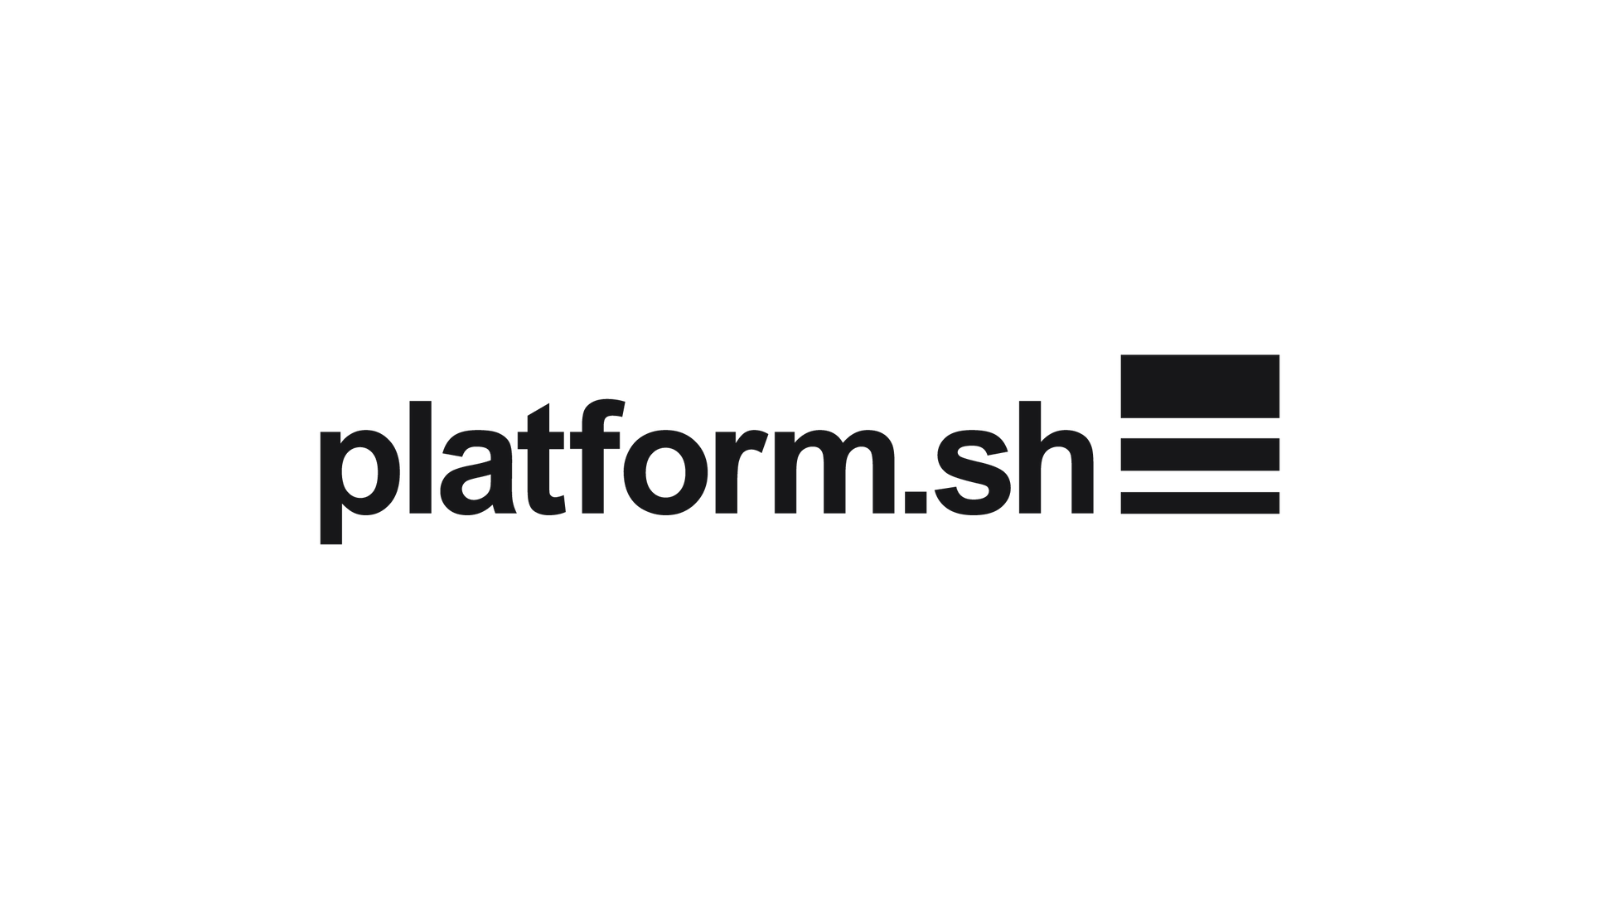 platform.sh